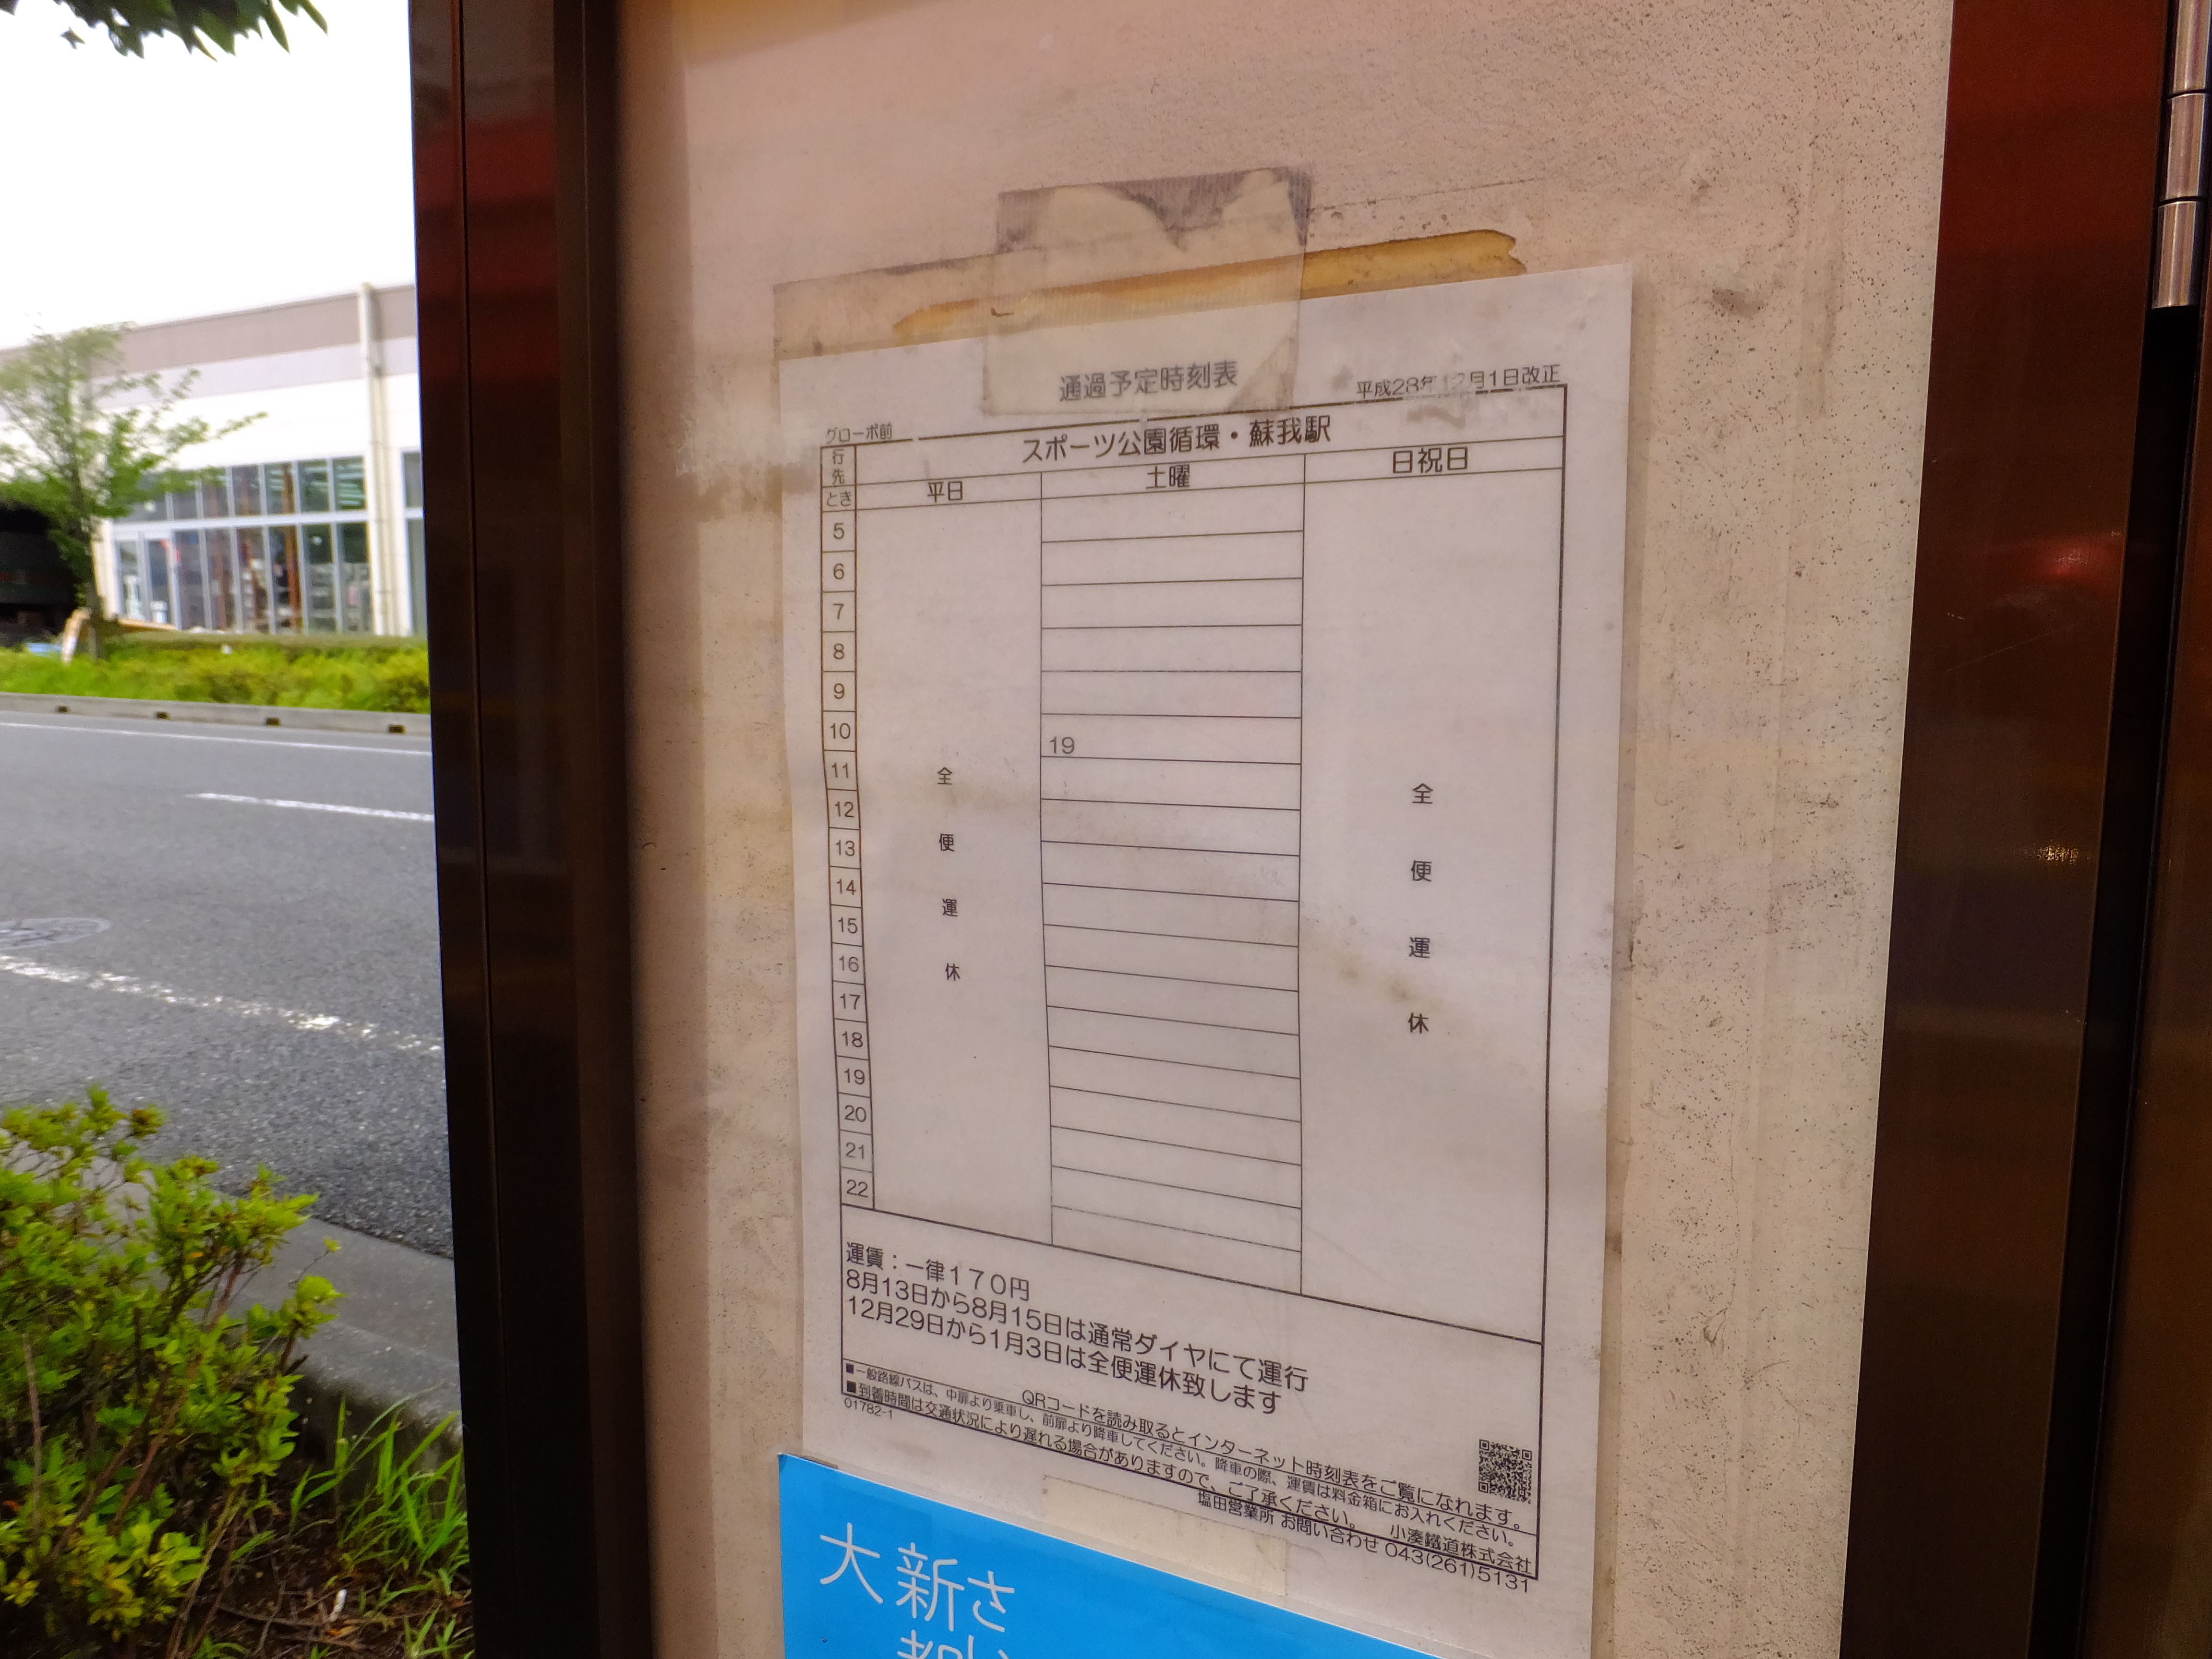 バス 時刻 表 小湊 小湊鐵道バス